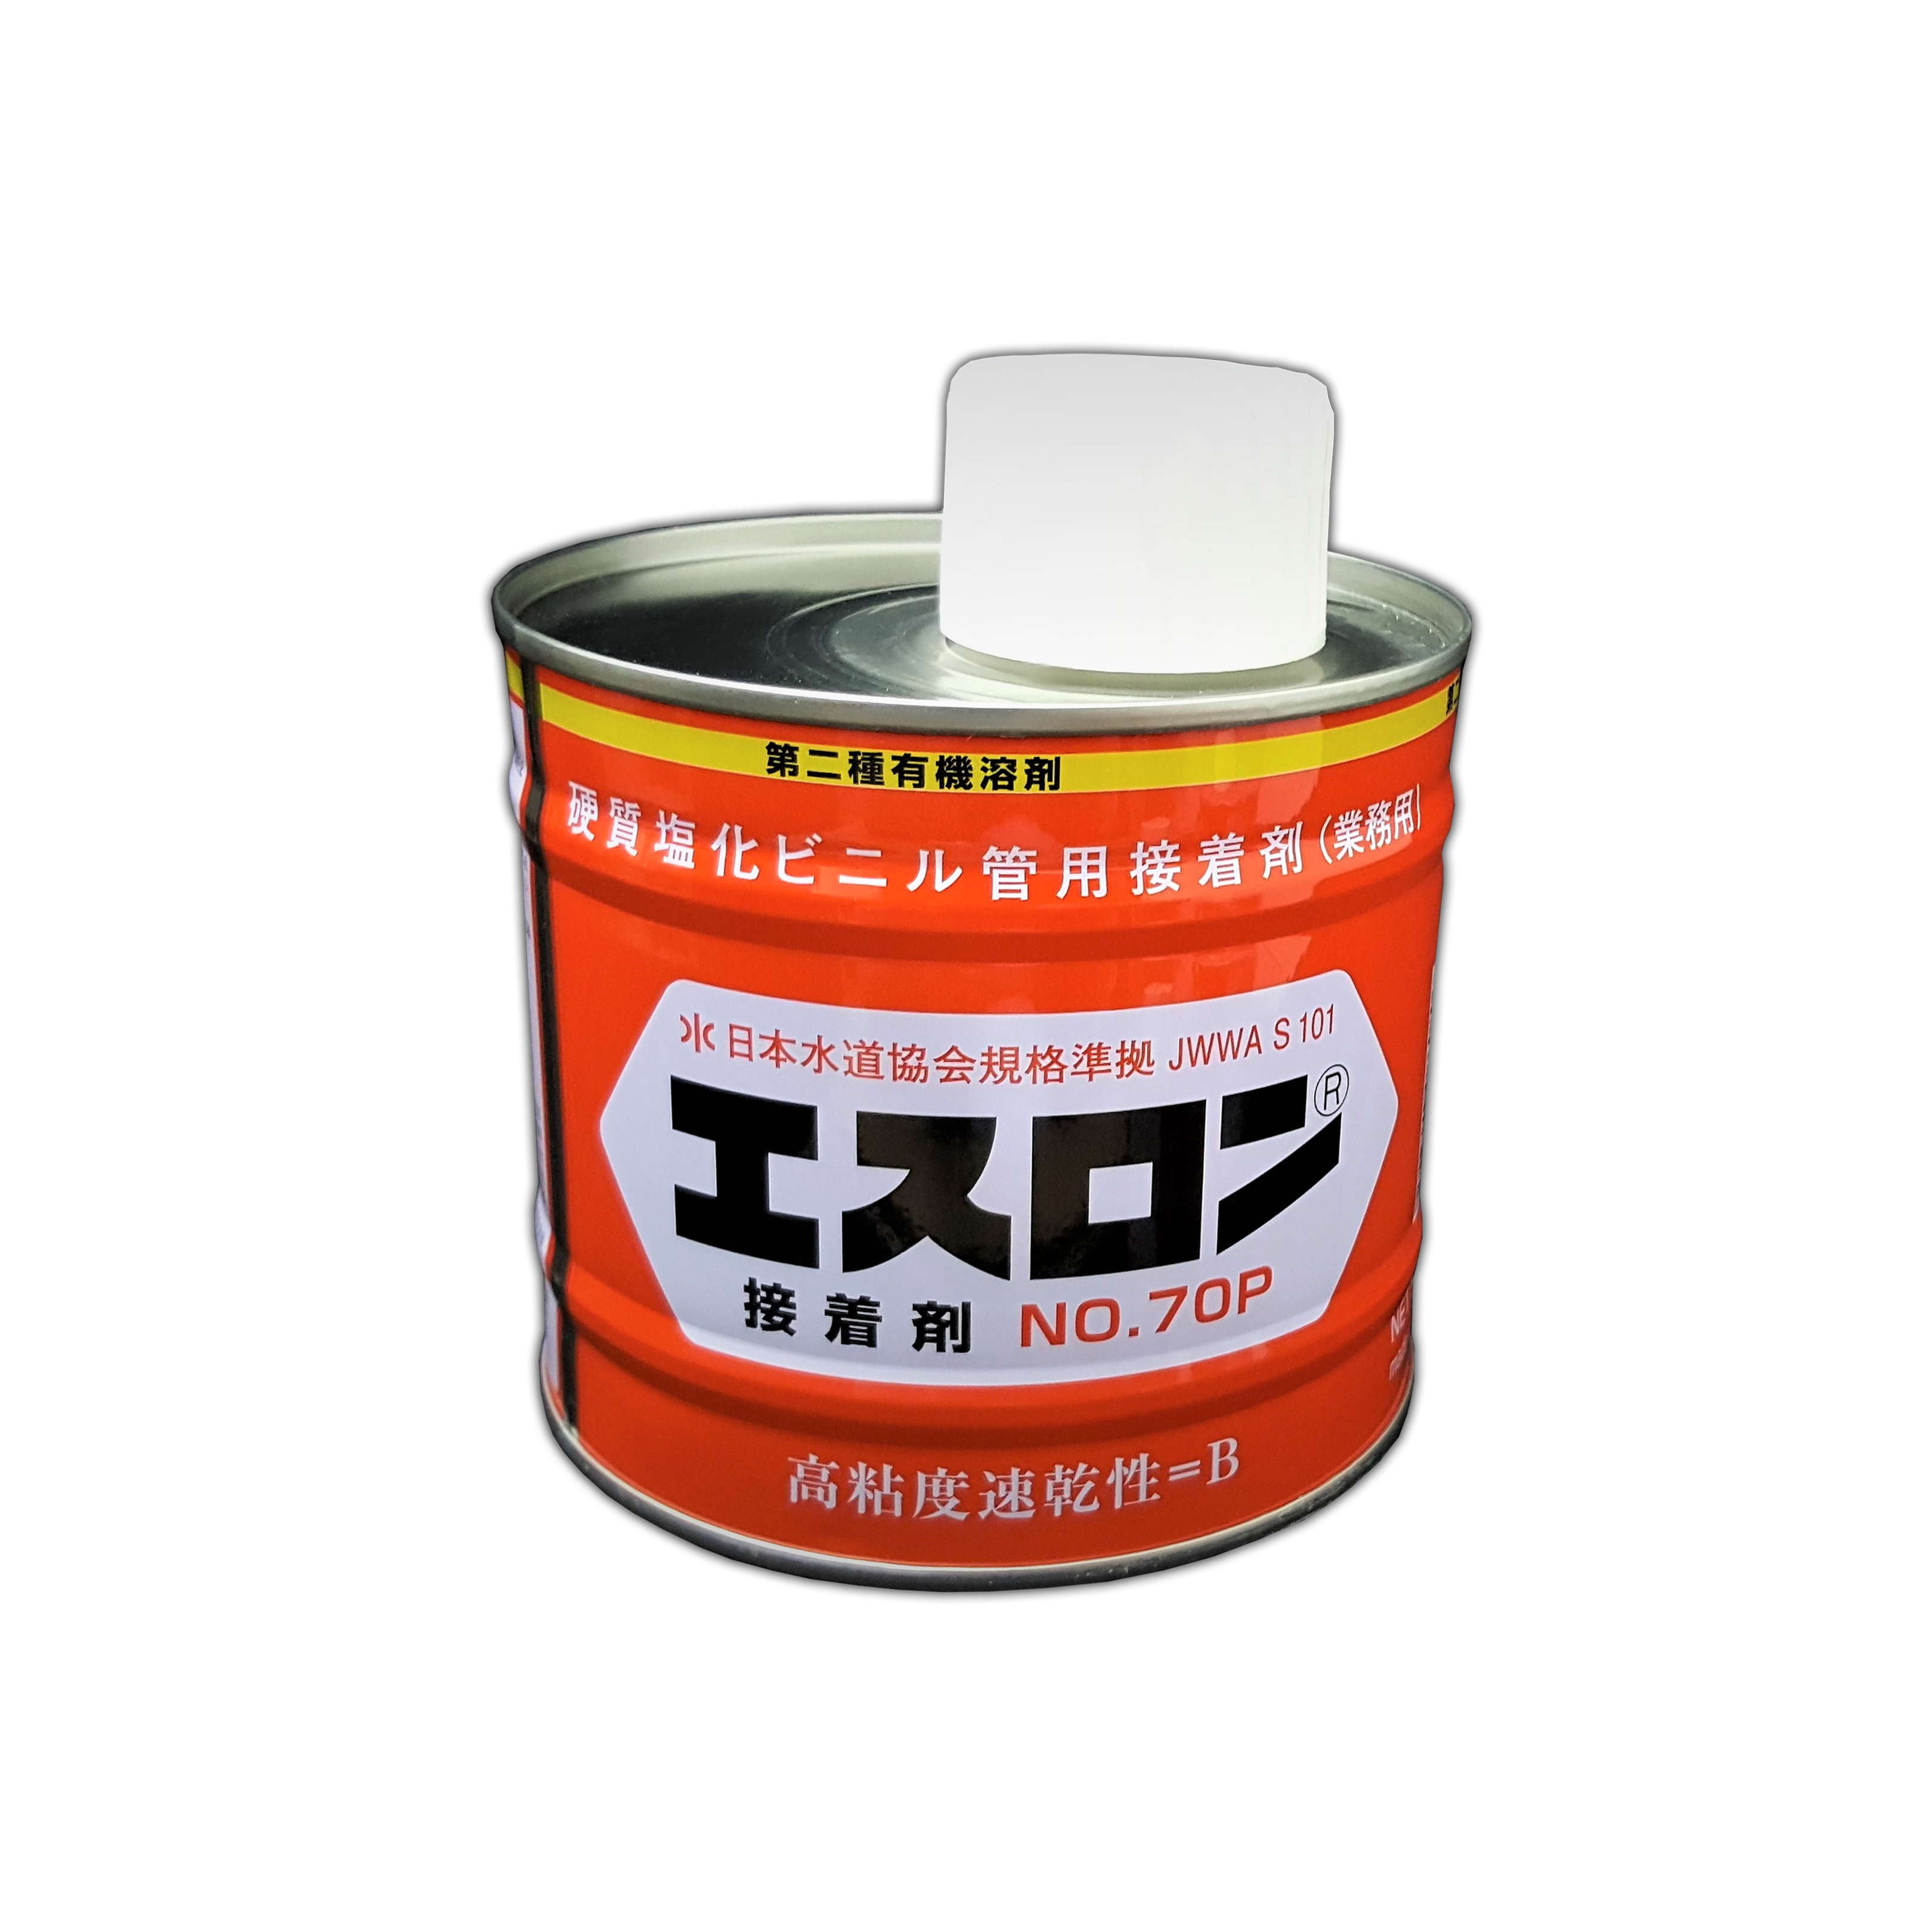 HUSKY 313 (500g PVC Glue (Japan))